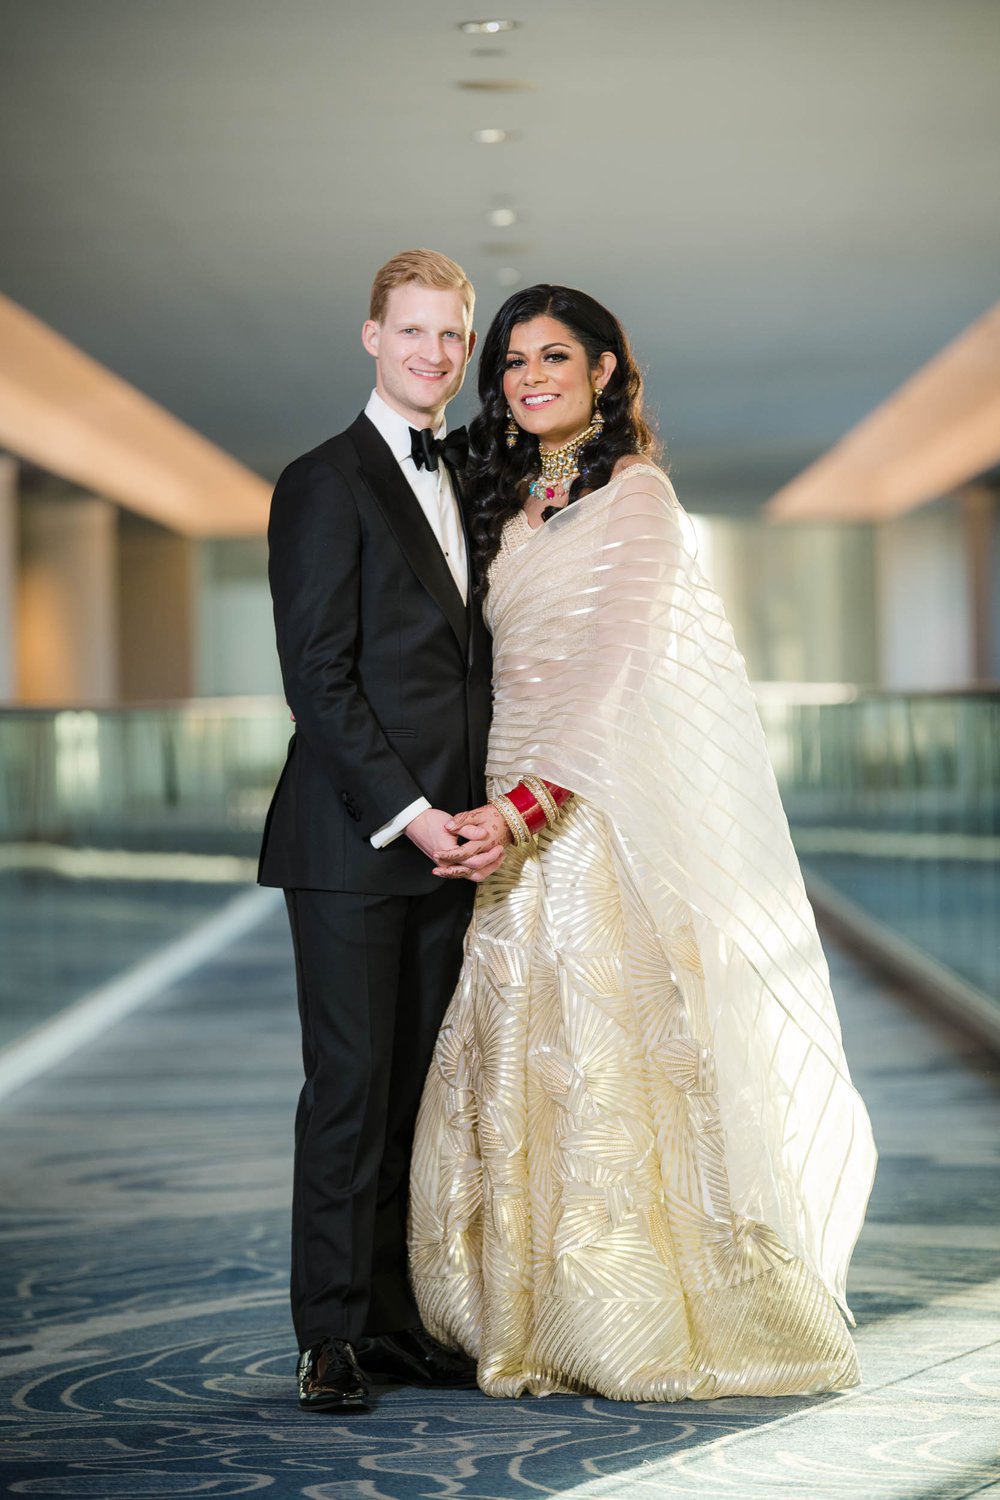 Indian Wedding Photographers Chicago | Renaissance Schaumburg | J. Brown Photography | bride and groom indoor portrait.